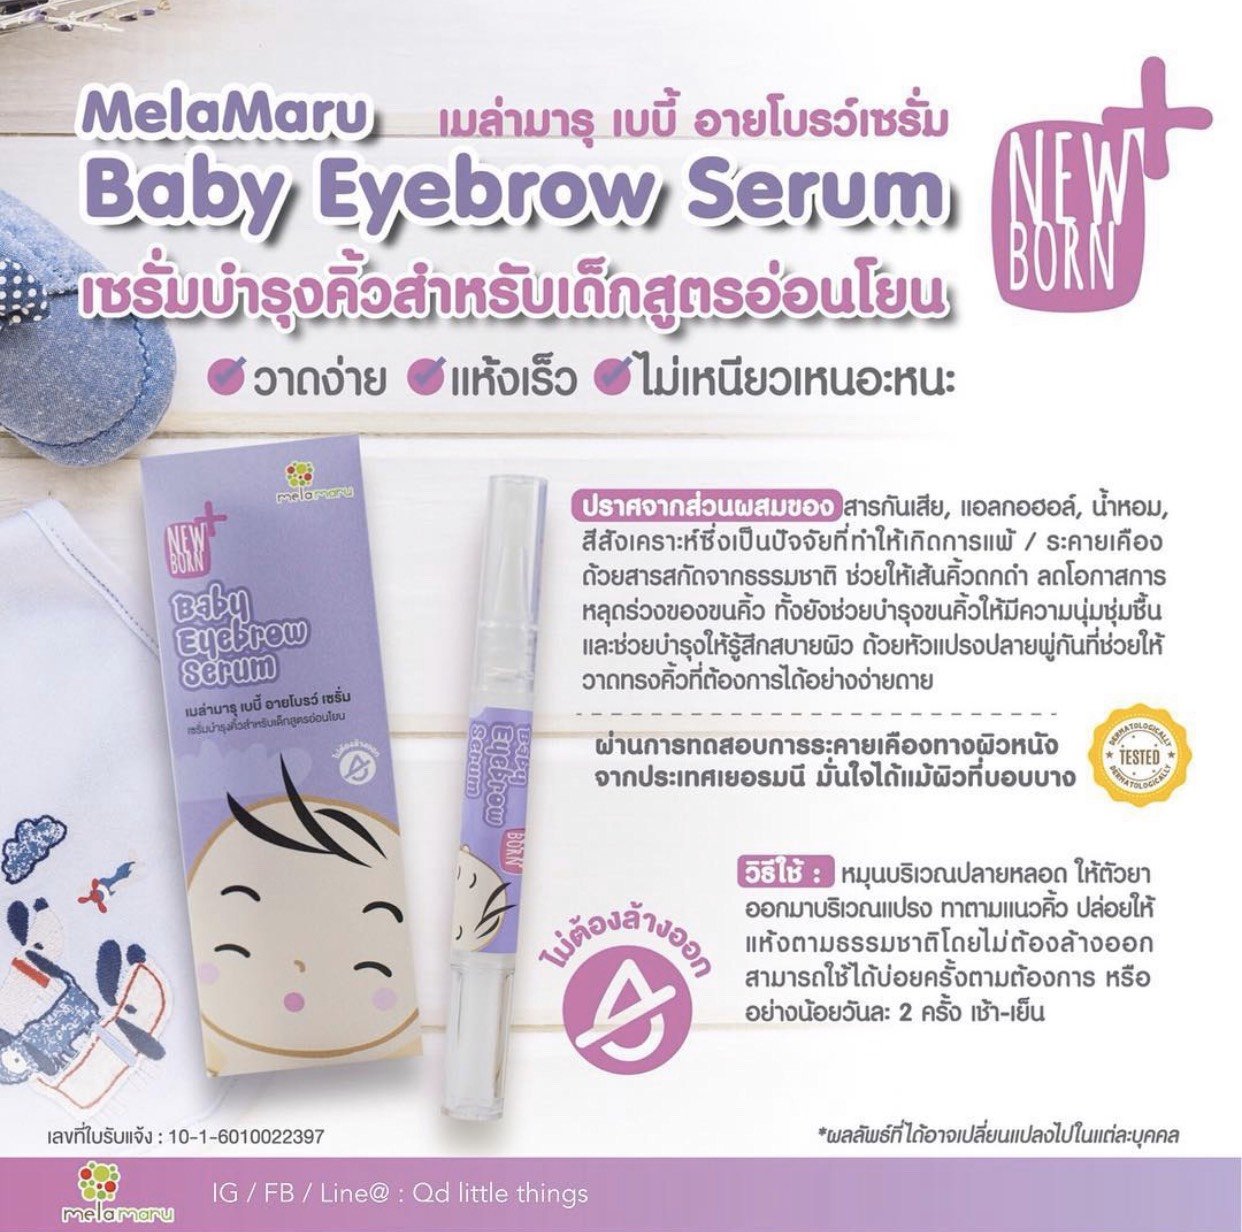 Mela Maru - Baby Eyebrow Serum